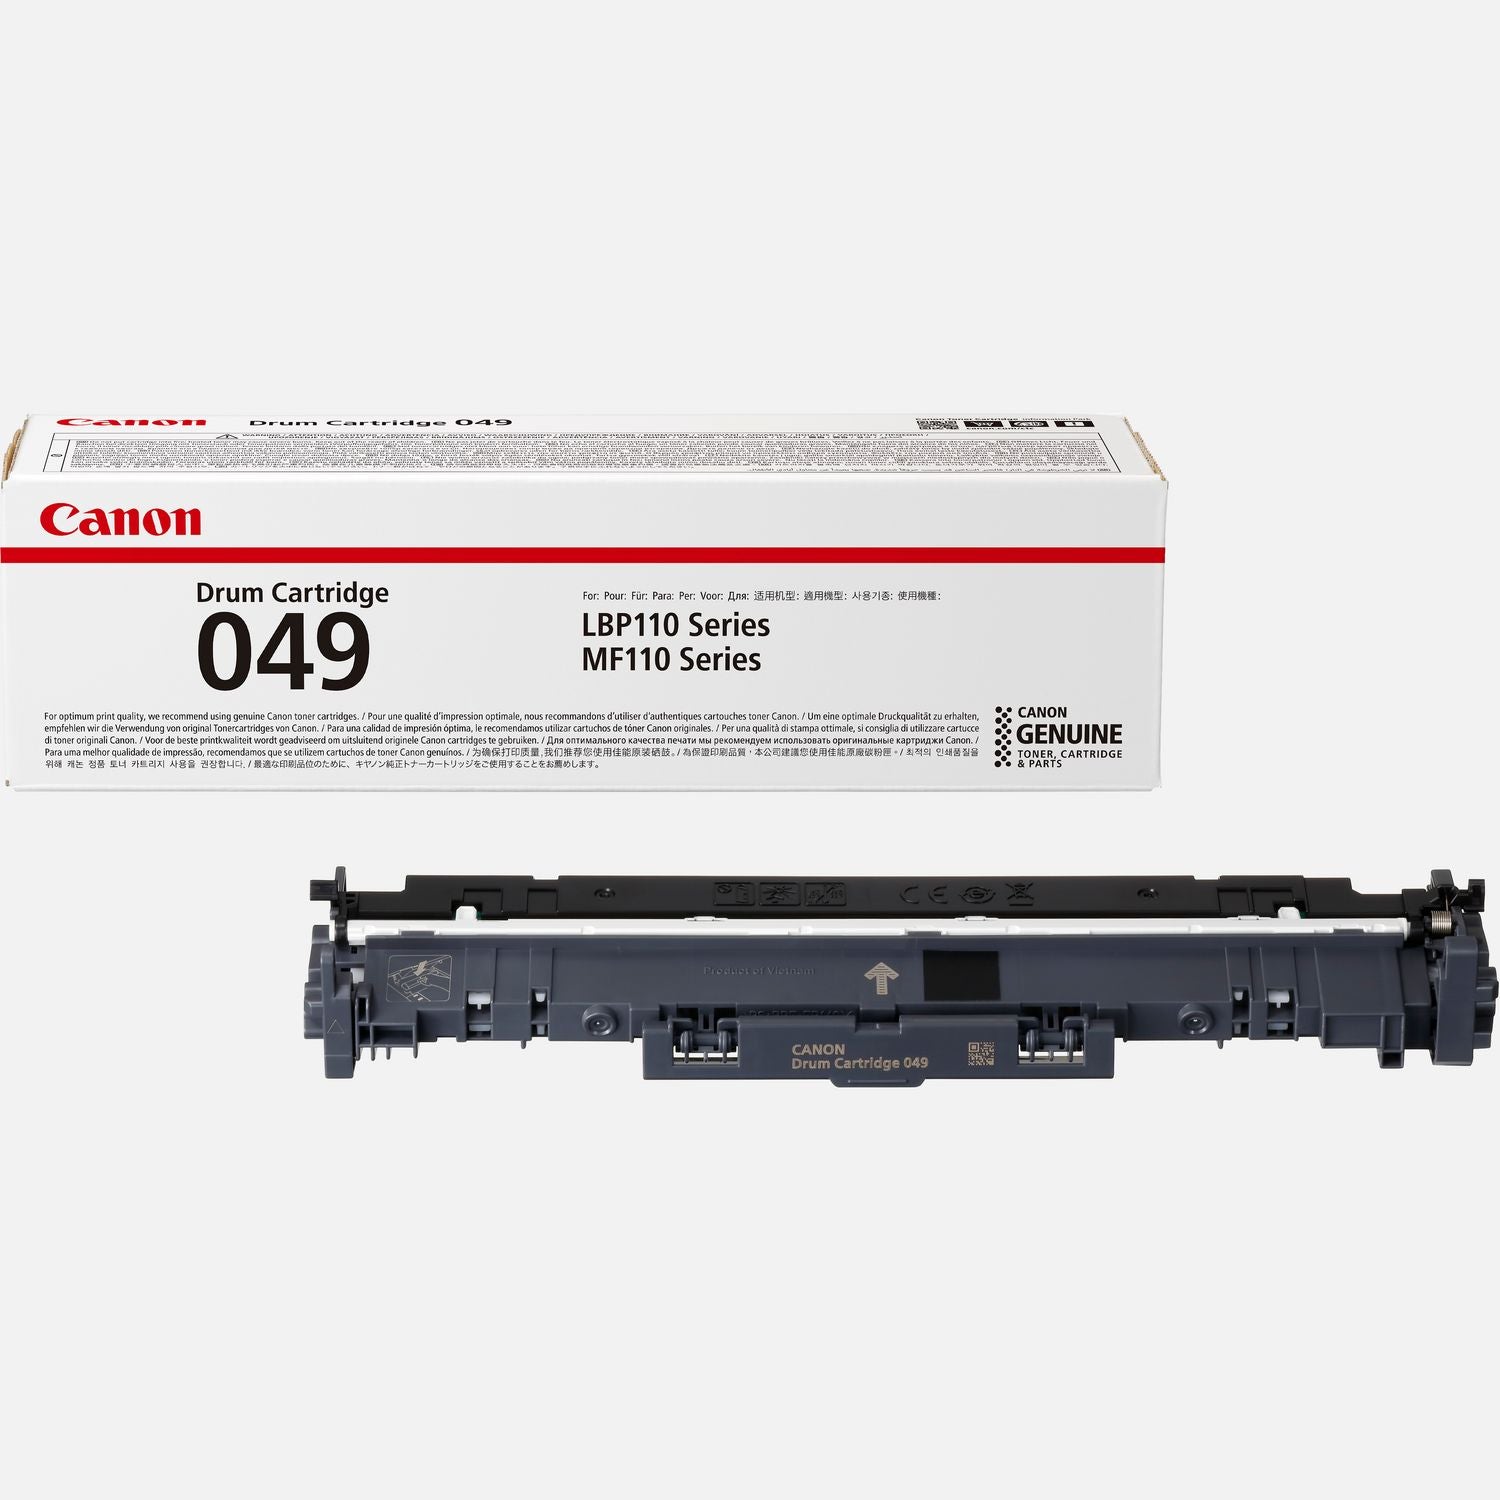 Absolute Toner Canon Lasers Drum 049 Black Original Genuine OEM Drum Toner | 2165C001 Original Canon Cartridges